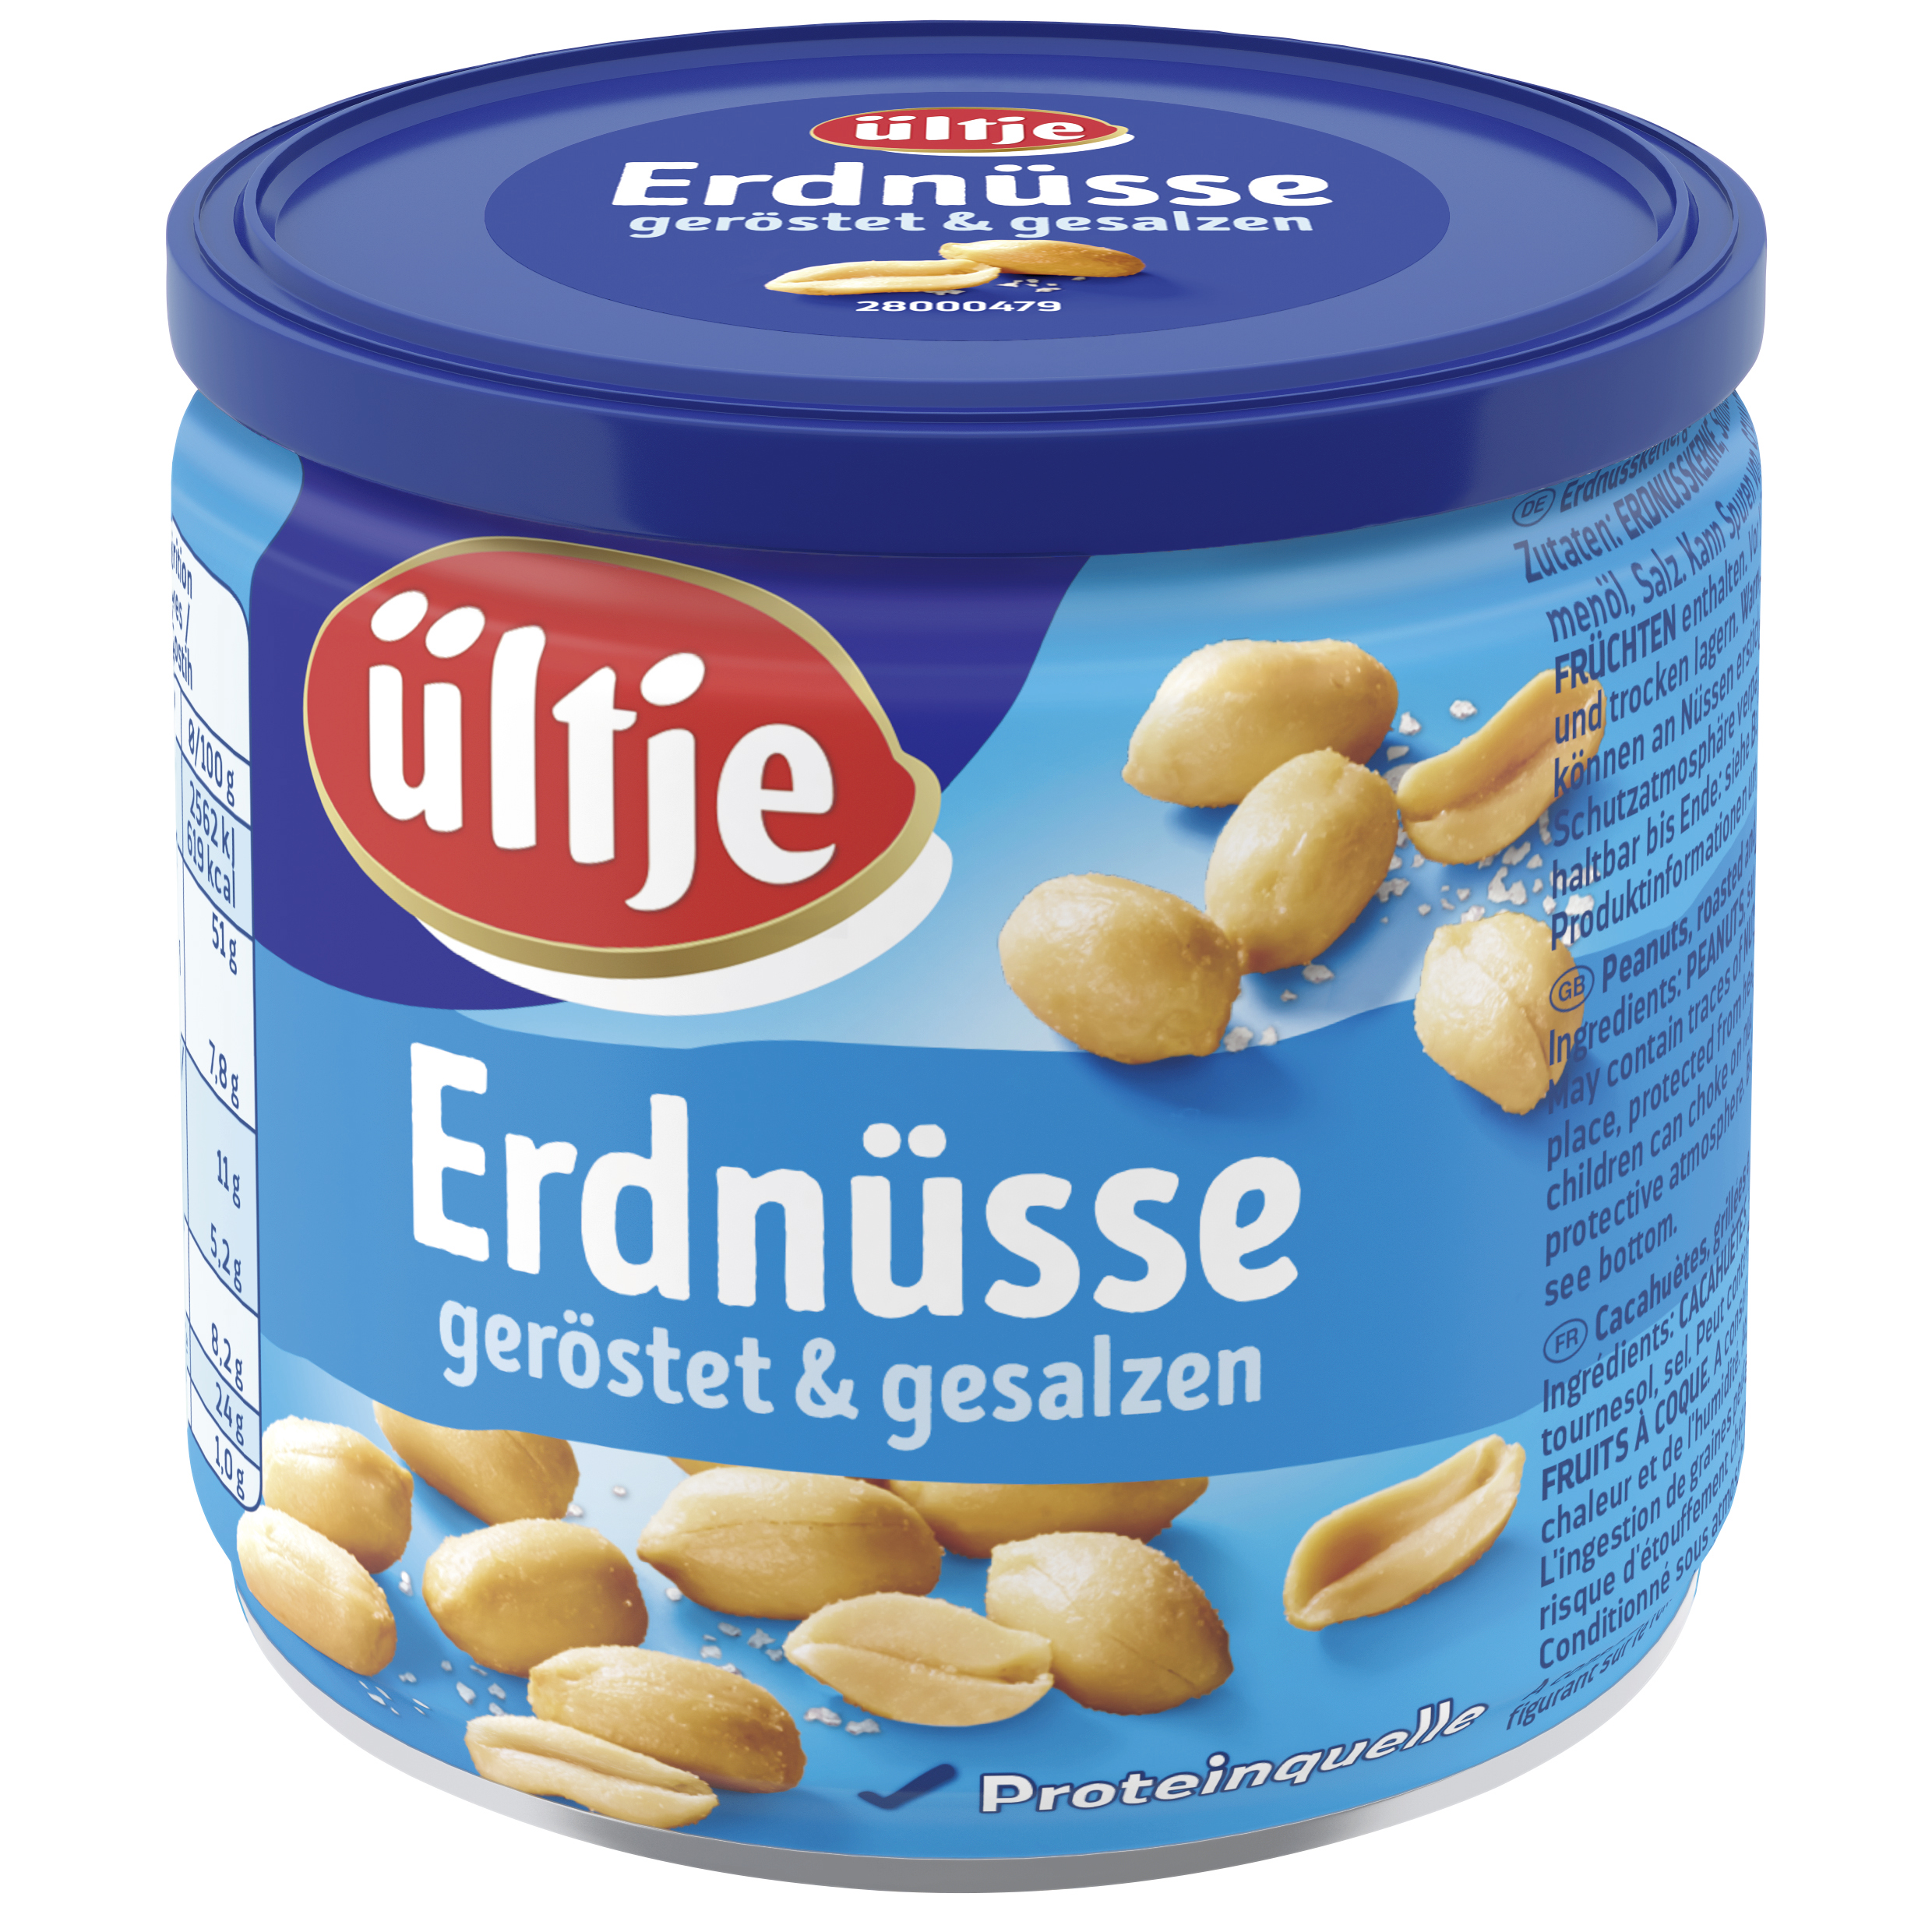 ültje Erdnüsse, geröstet & gesalzen, 200g Dose